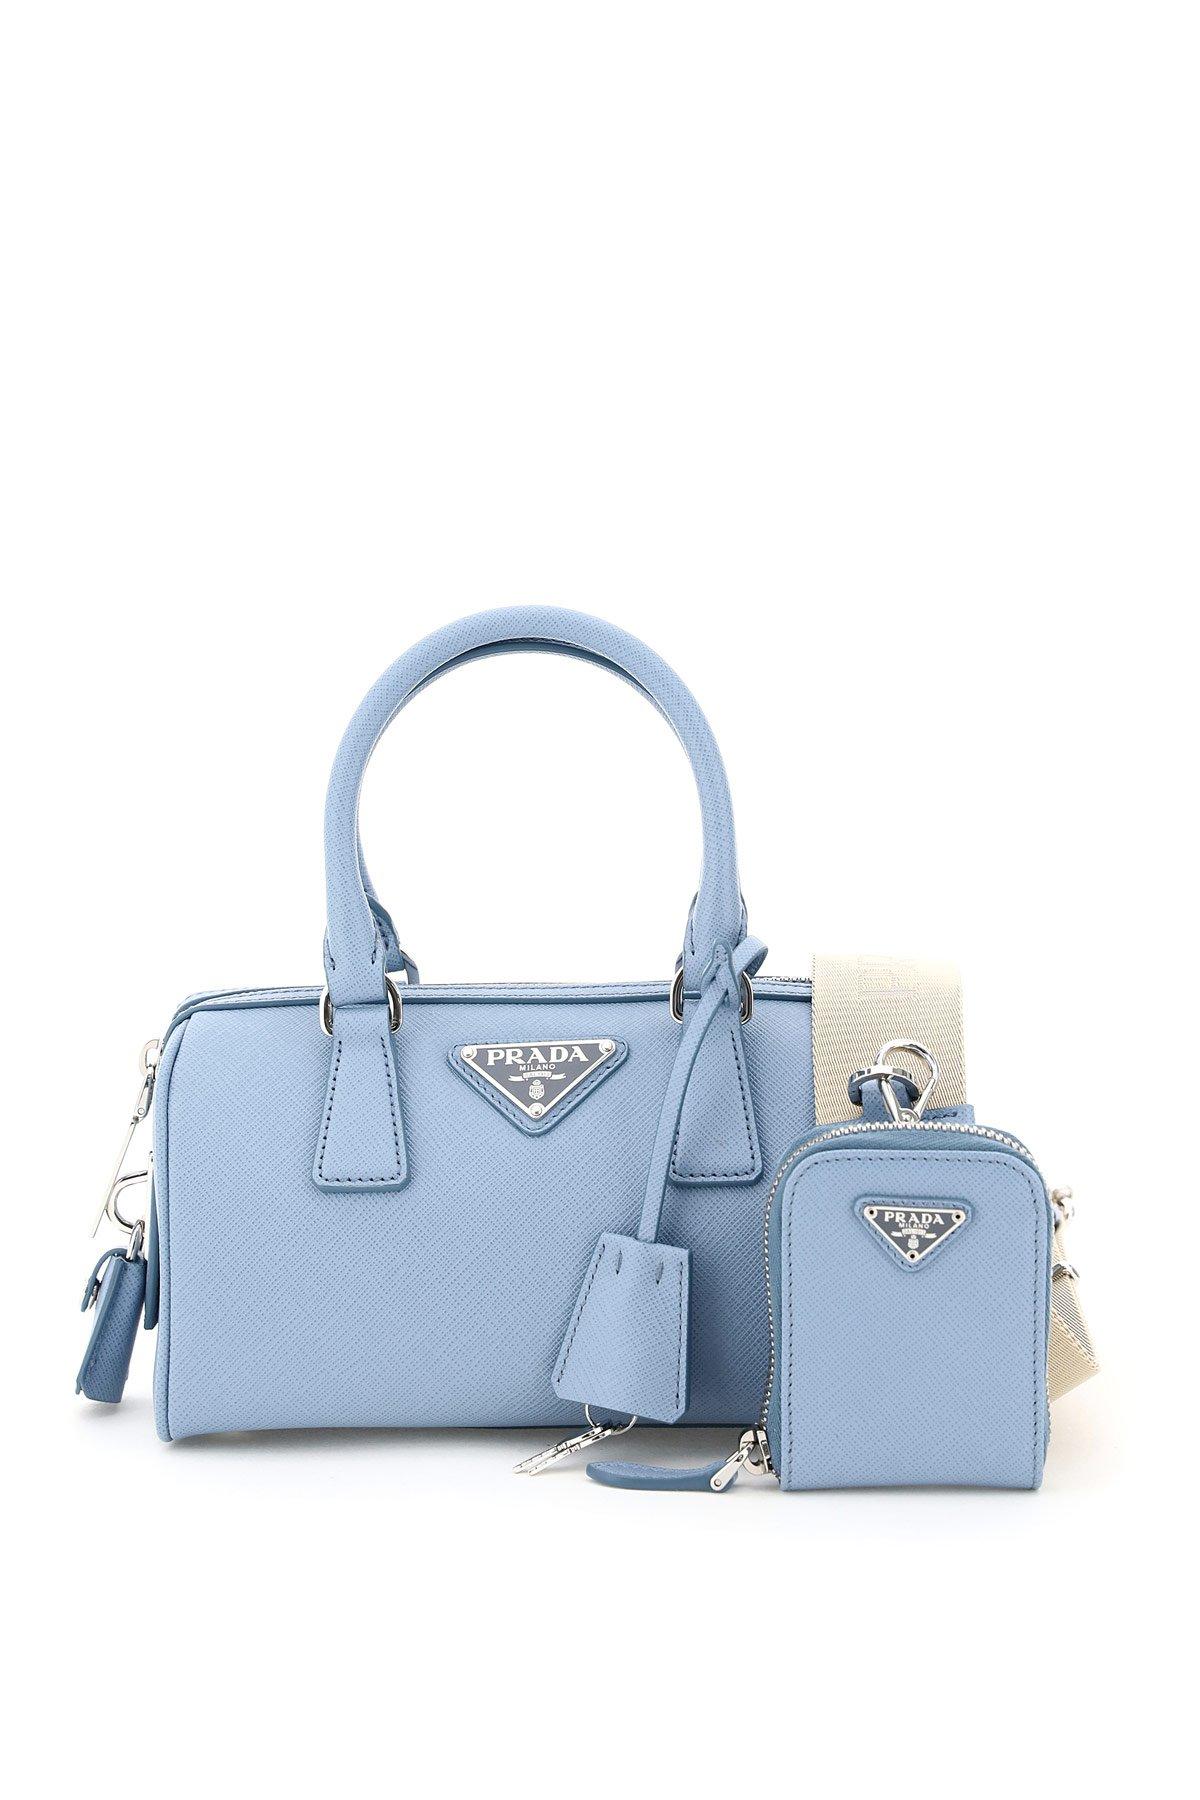 Prada Logo Plaque Saffiano Top Handle Bag in Blue | Lyst